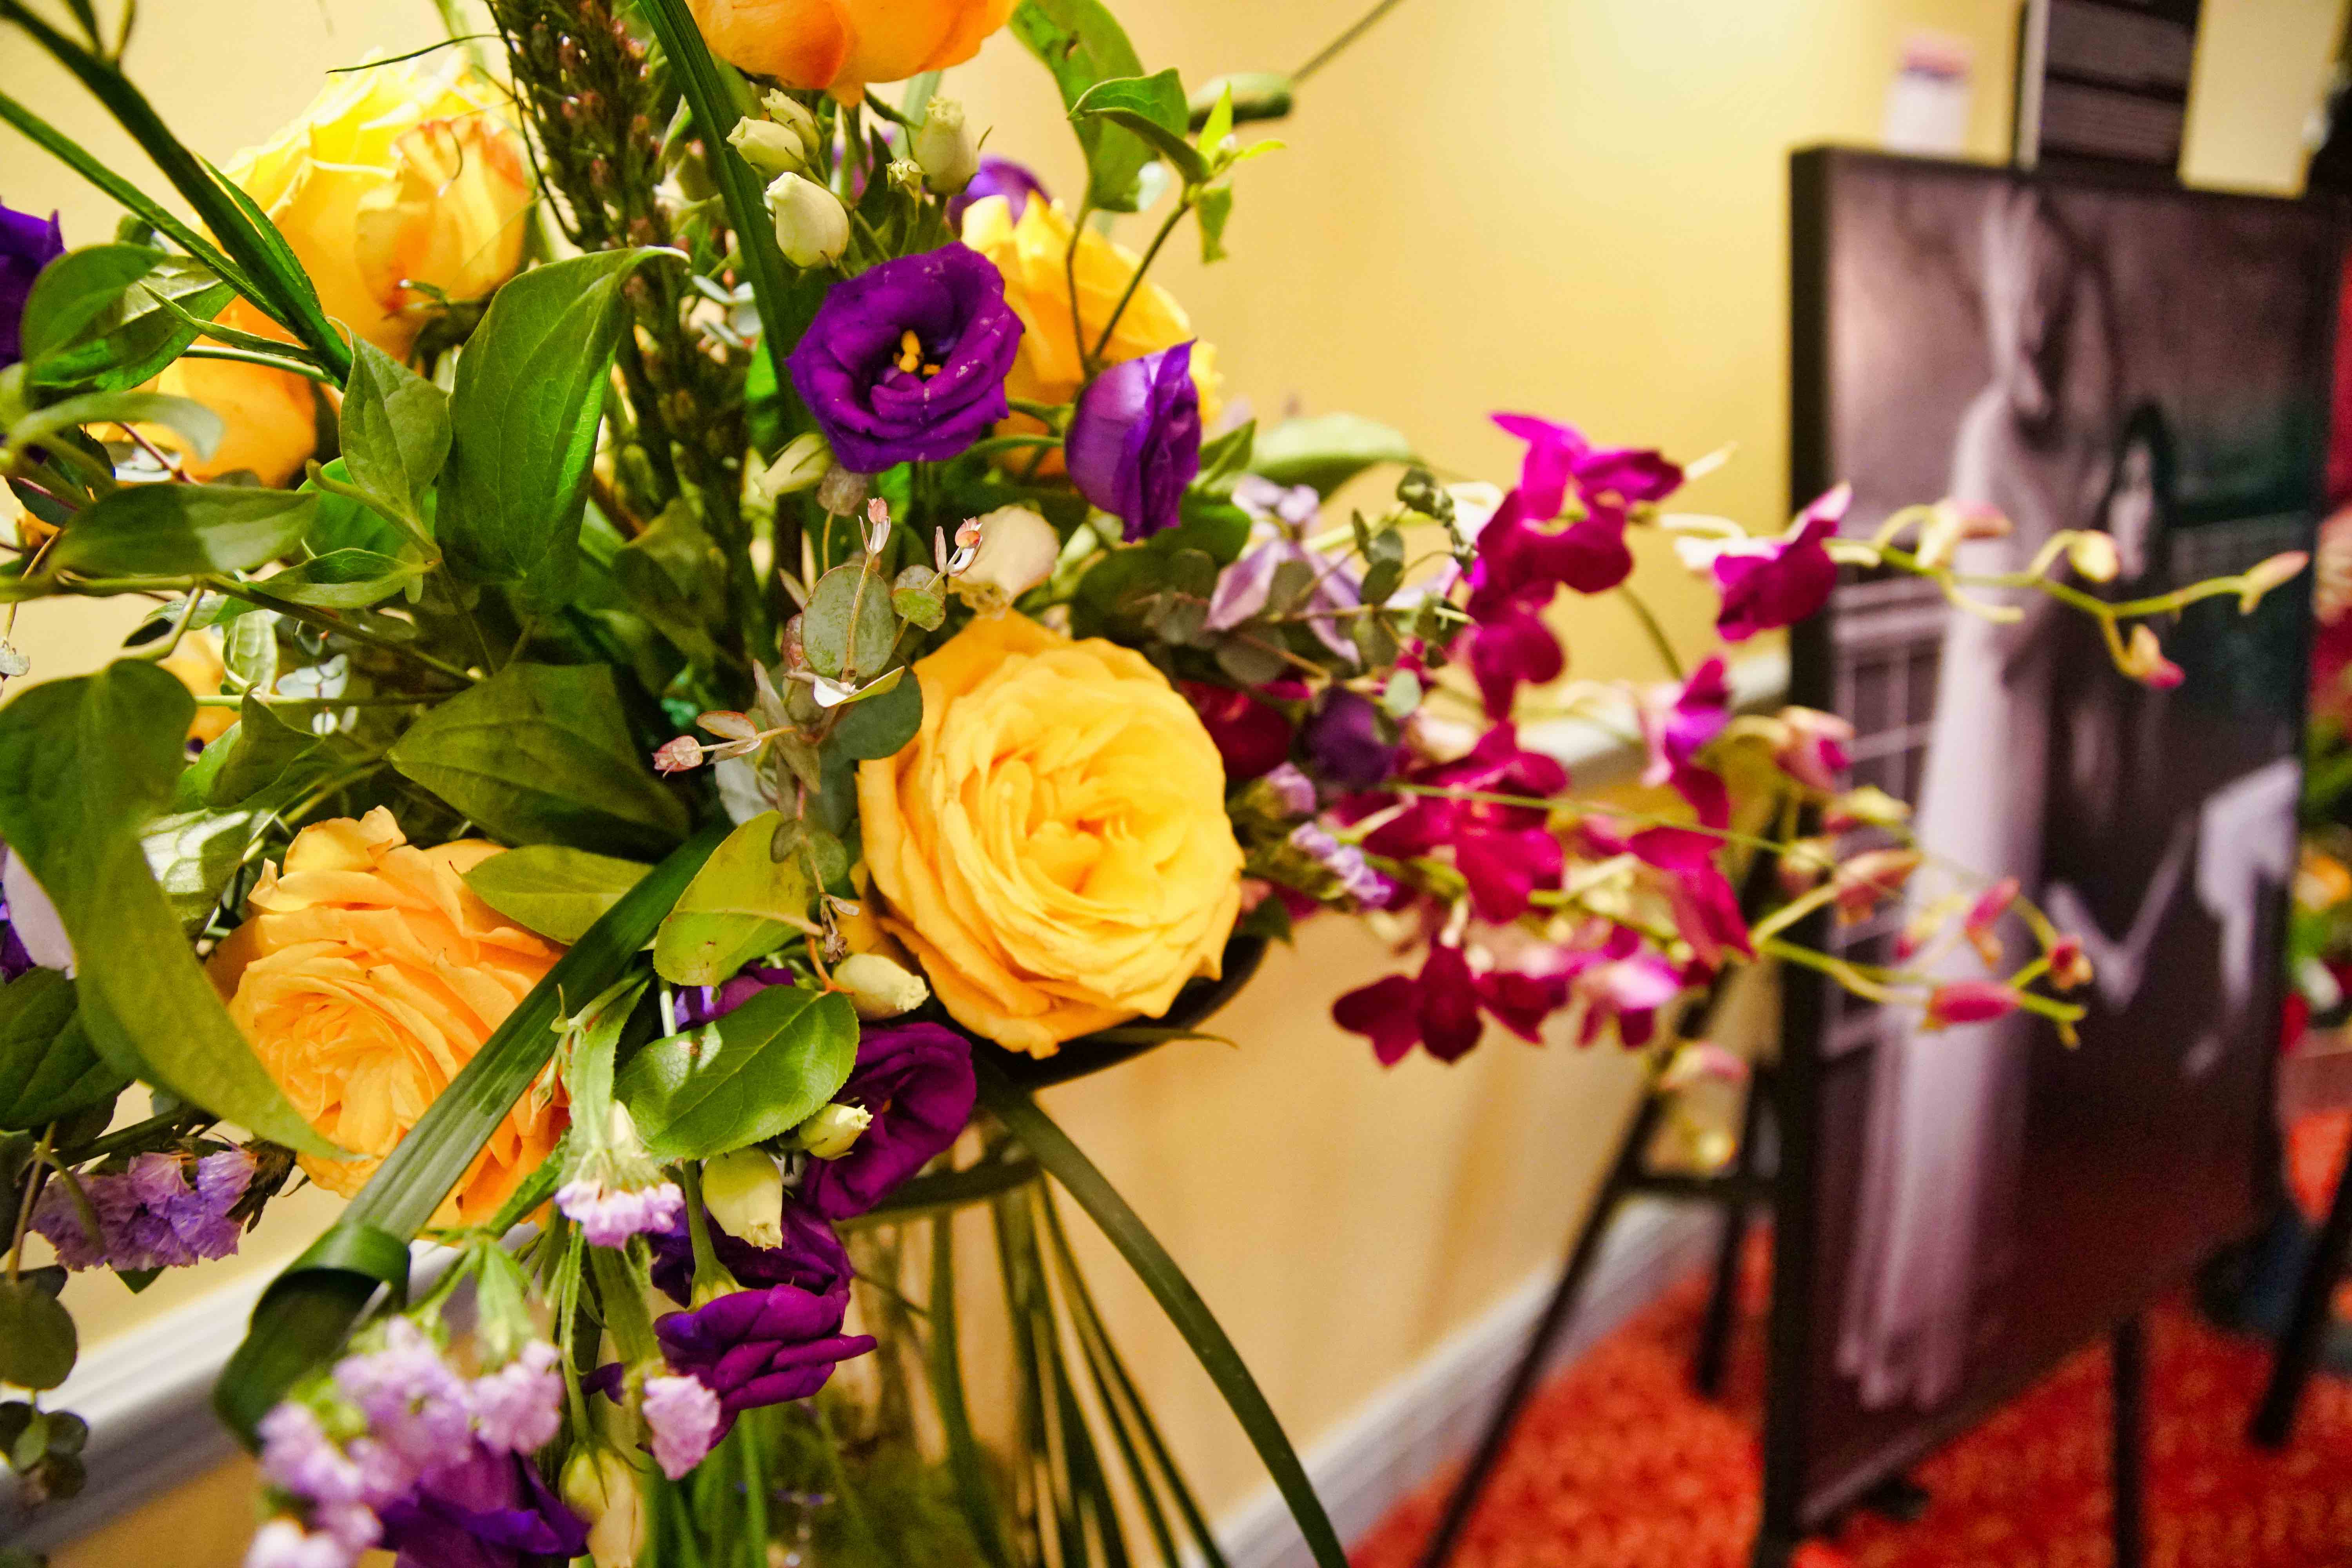 A photo of a floral arrangement from 2019 CAS